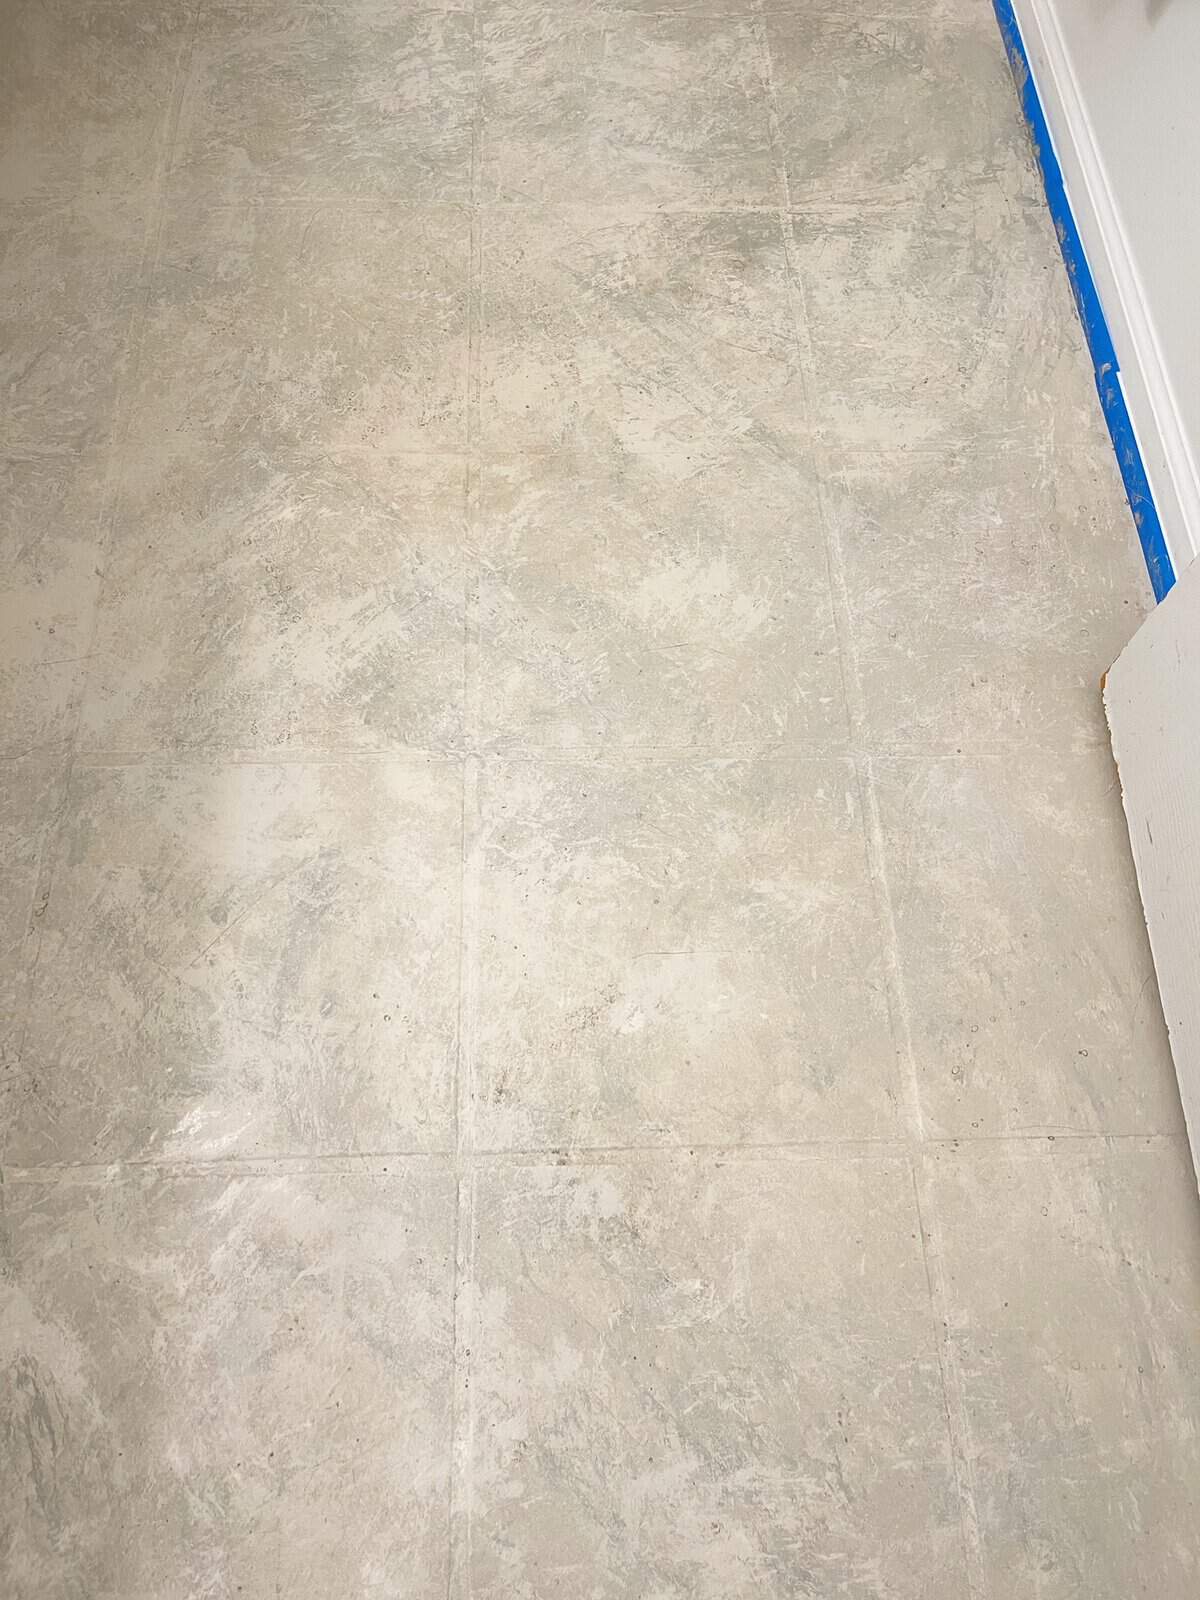 paint tile floor easy